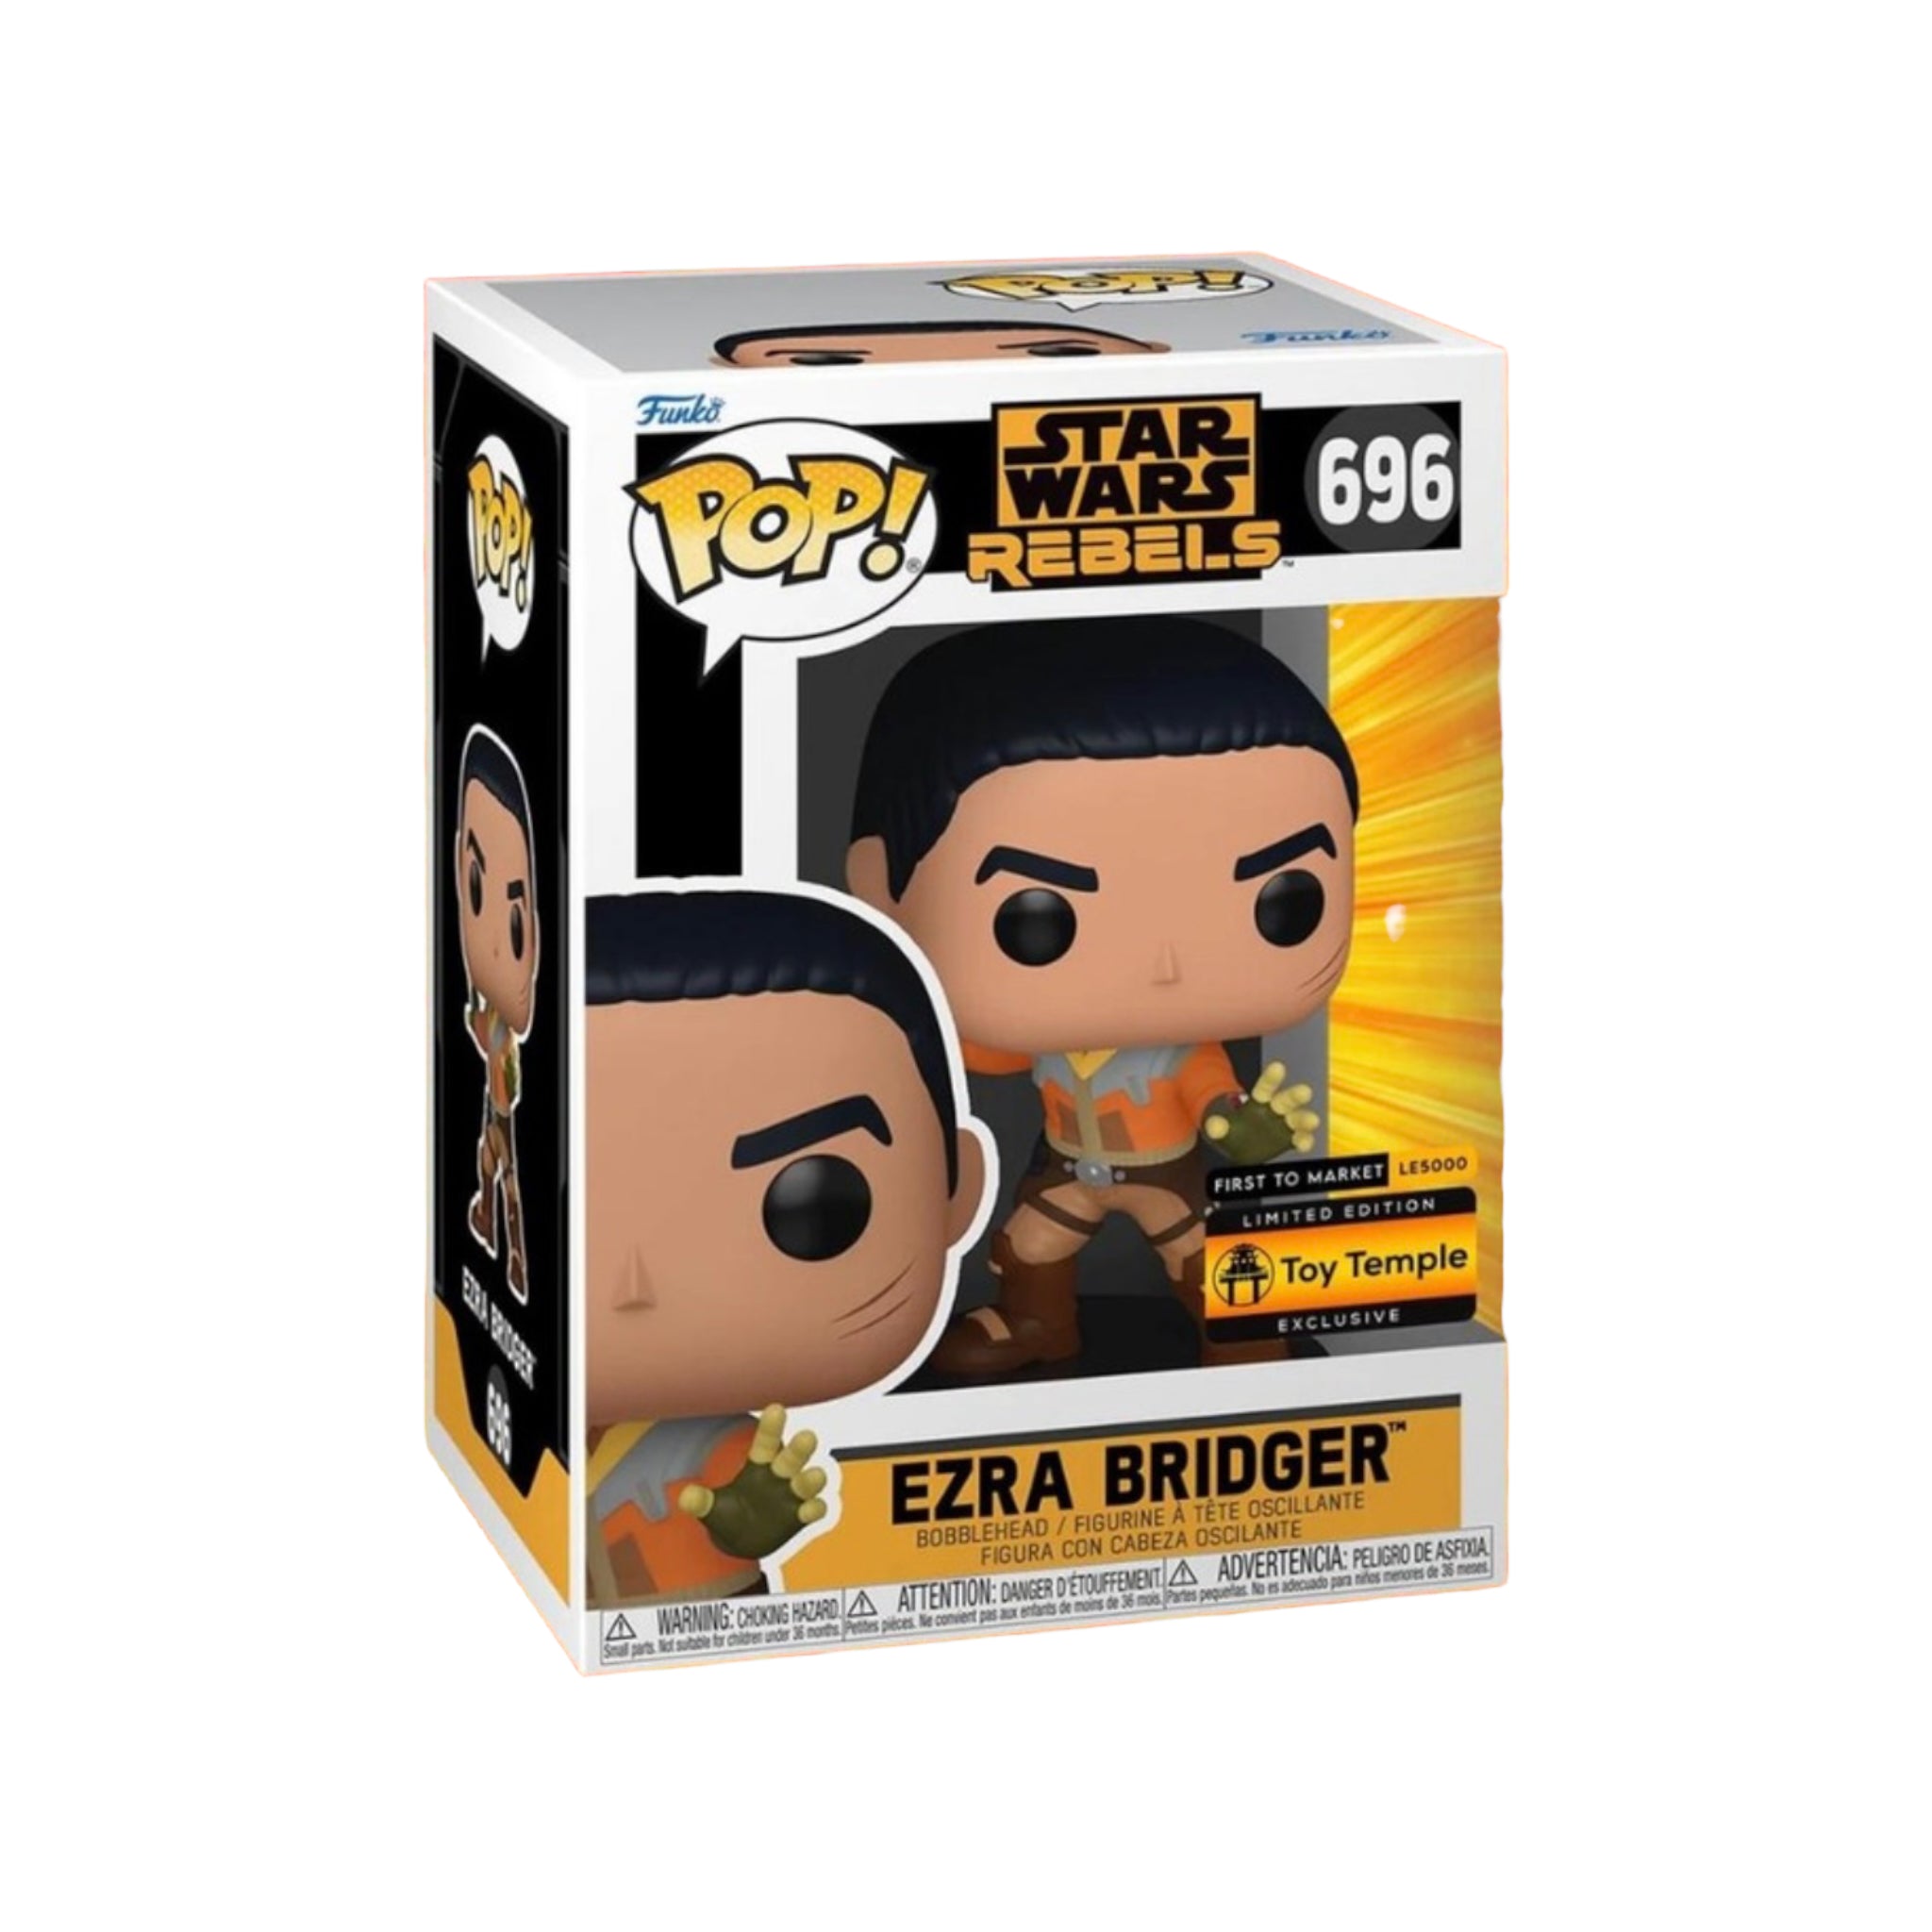 Ezra Bridger #696 Funko Pop! - Star Wars: Rebels - Toy Temple First to Market Exclusive LE5000 Pcs